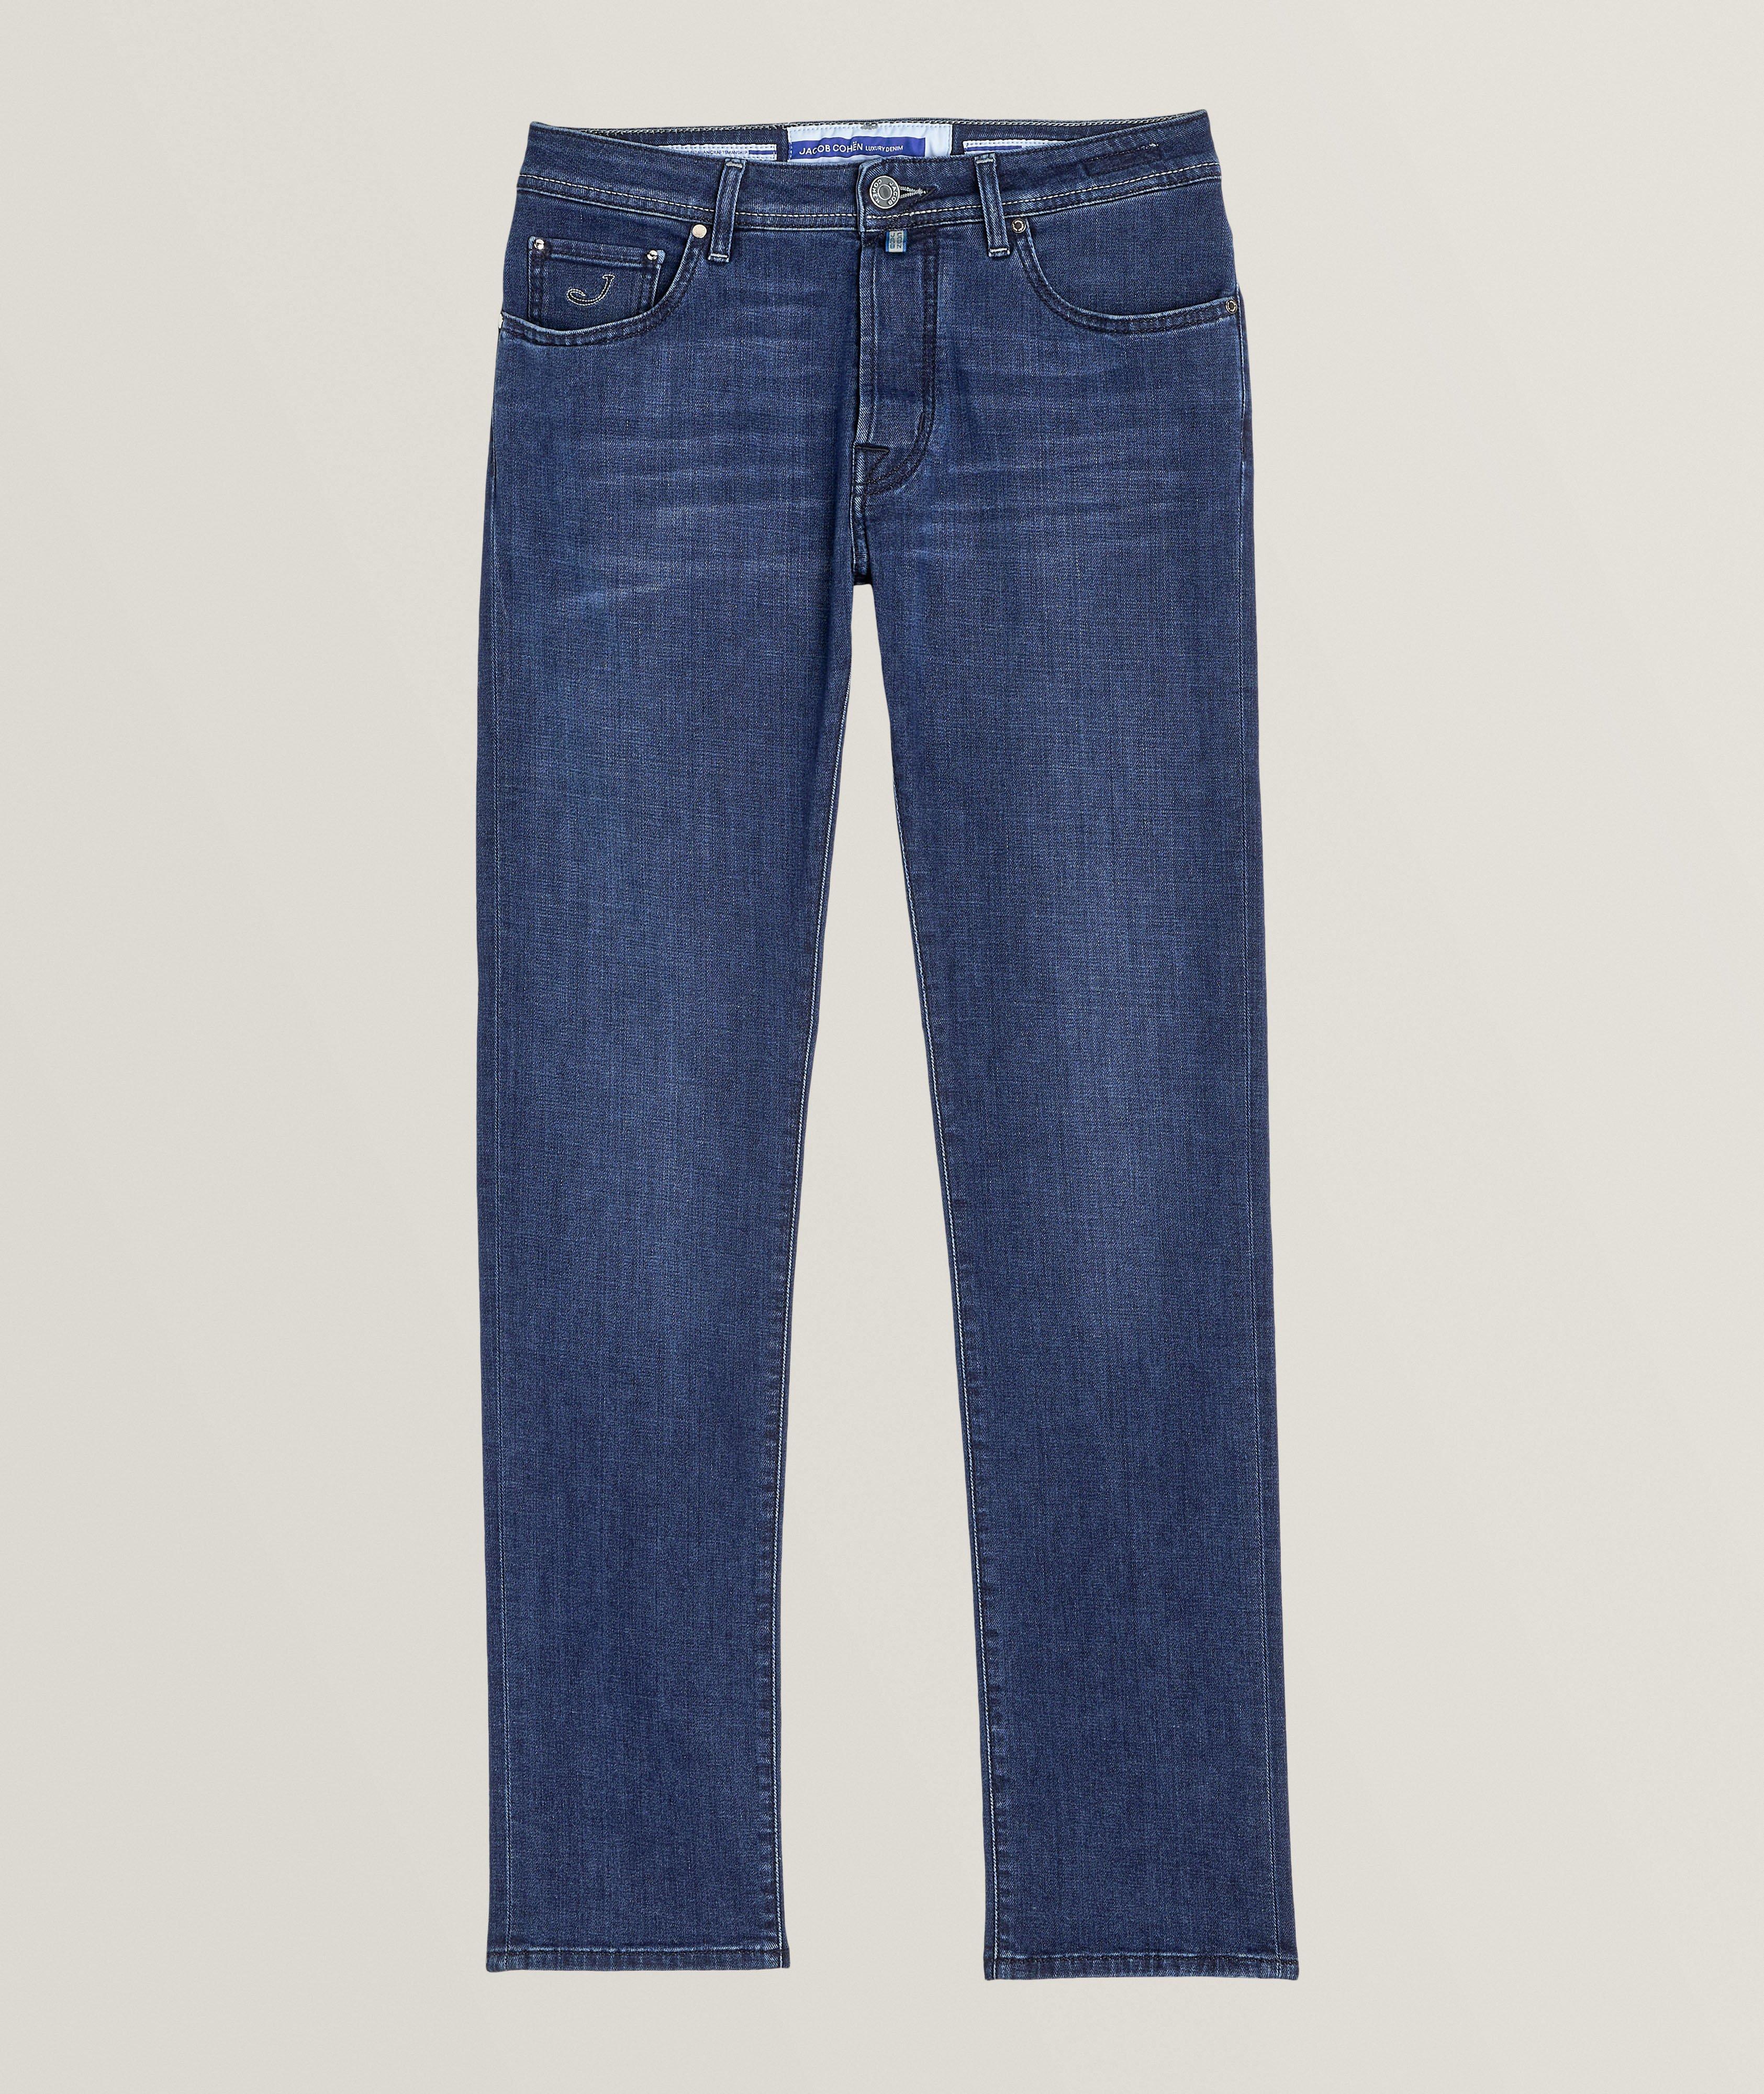 Bard Slim Fit Stretch-Cotton Jeans image 0